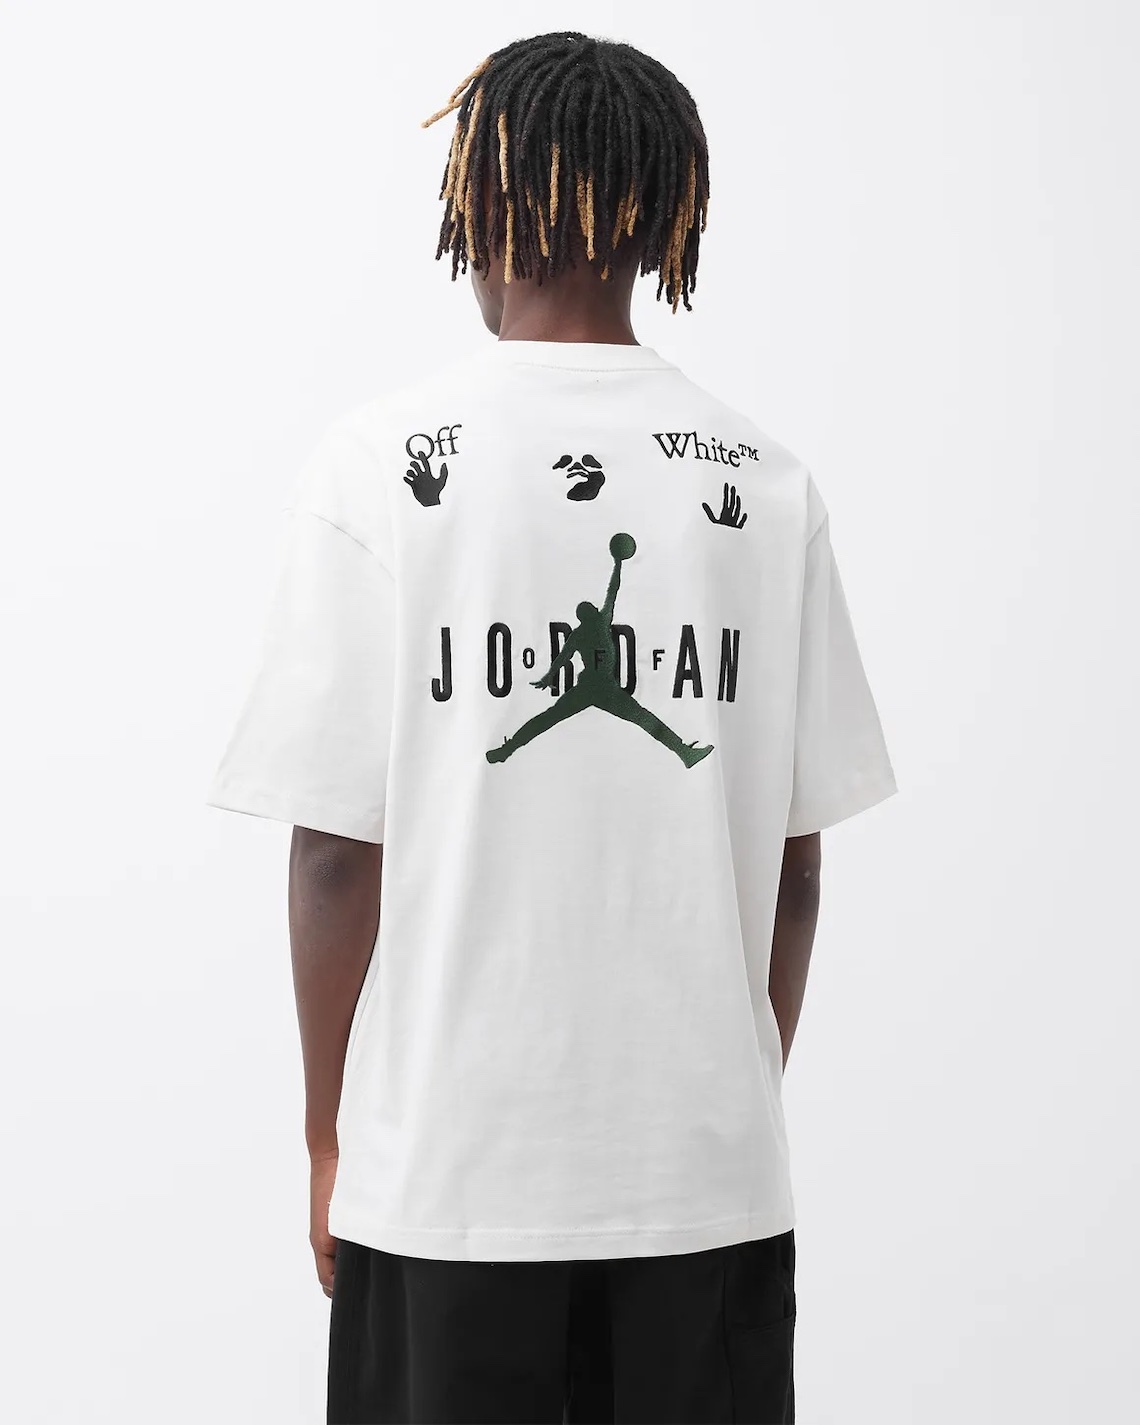 OFF-WHITE x Jordan Top Green/Black Men's - FW21 - US